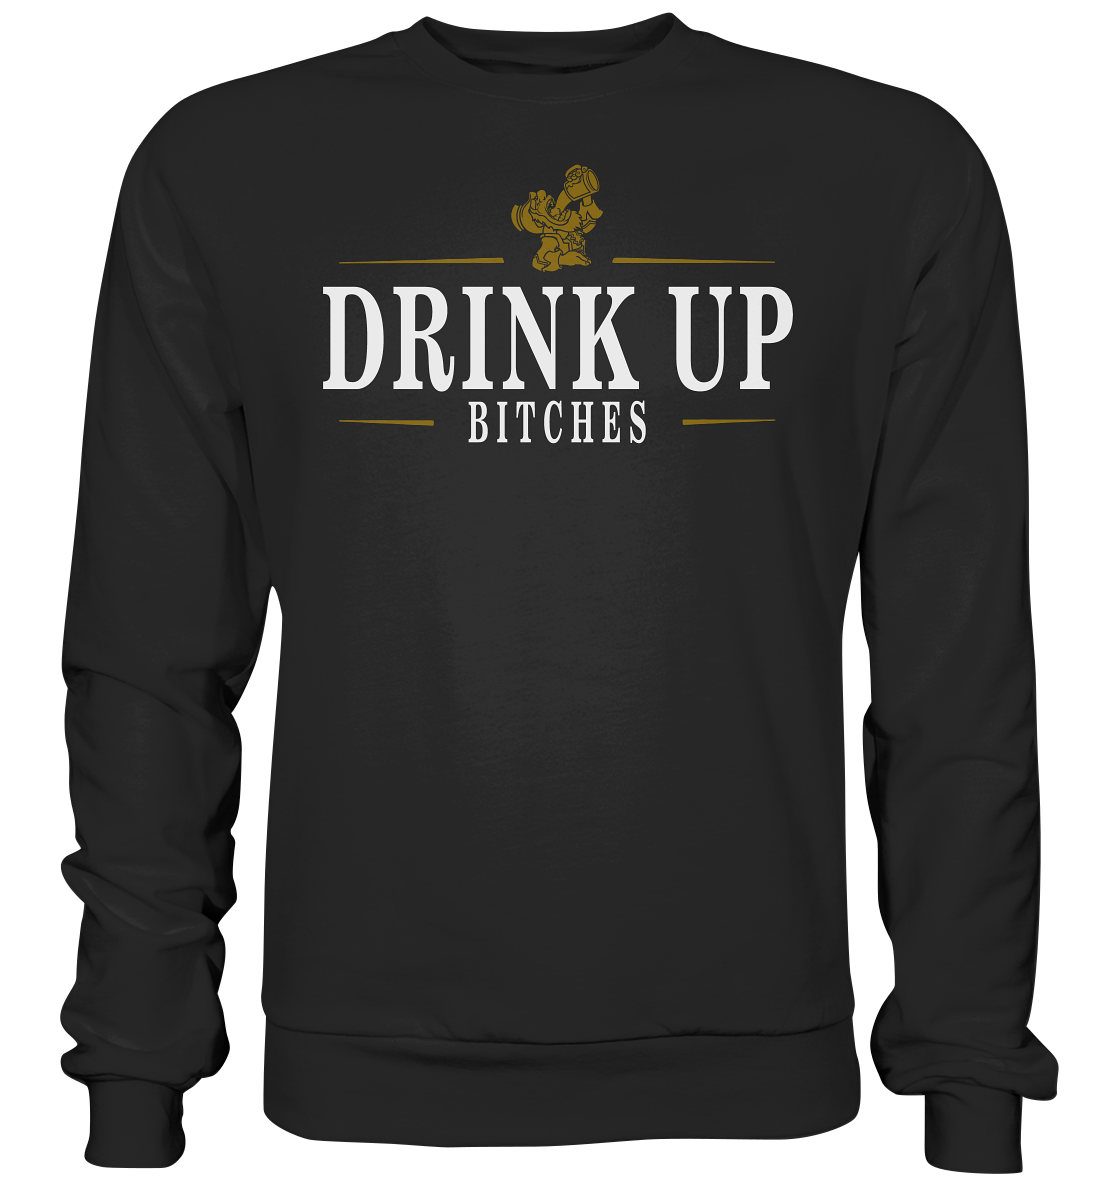 Drink Up "Bitches" - Basic Sweatshirt